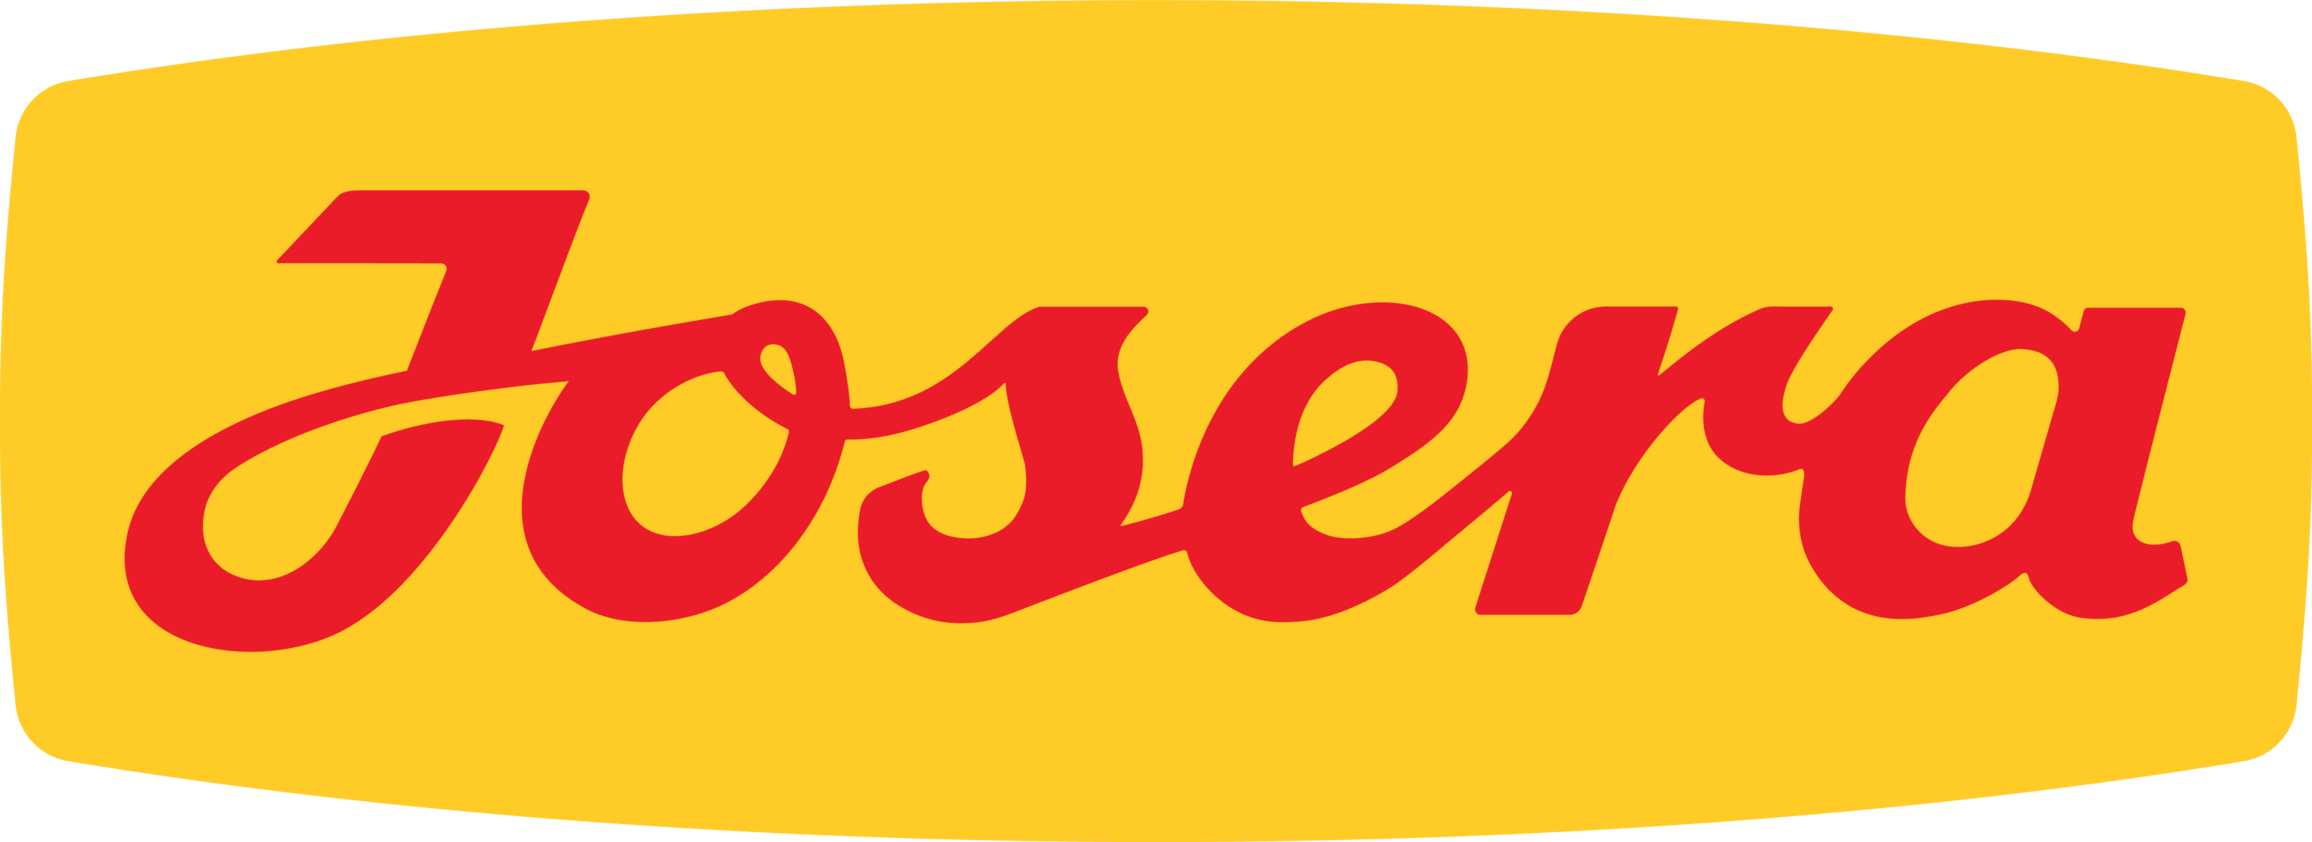 Logo-JOSERA